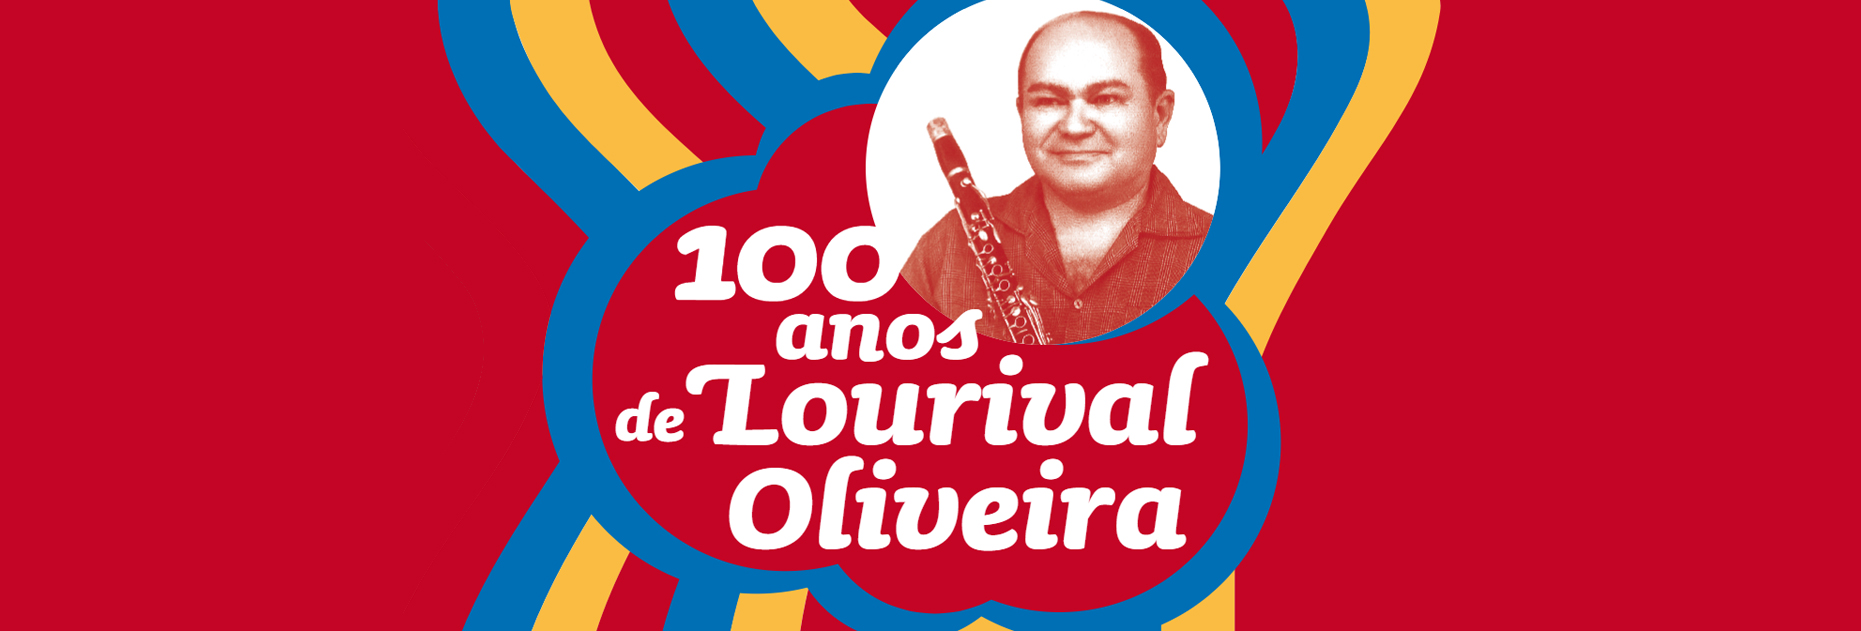 Projeto revela e dissemina a obra do maestro e clarinetista Lourival Oliveira